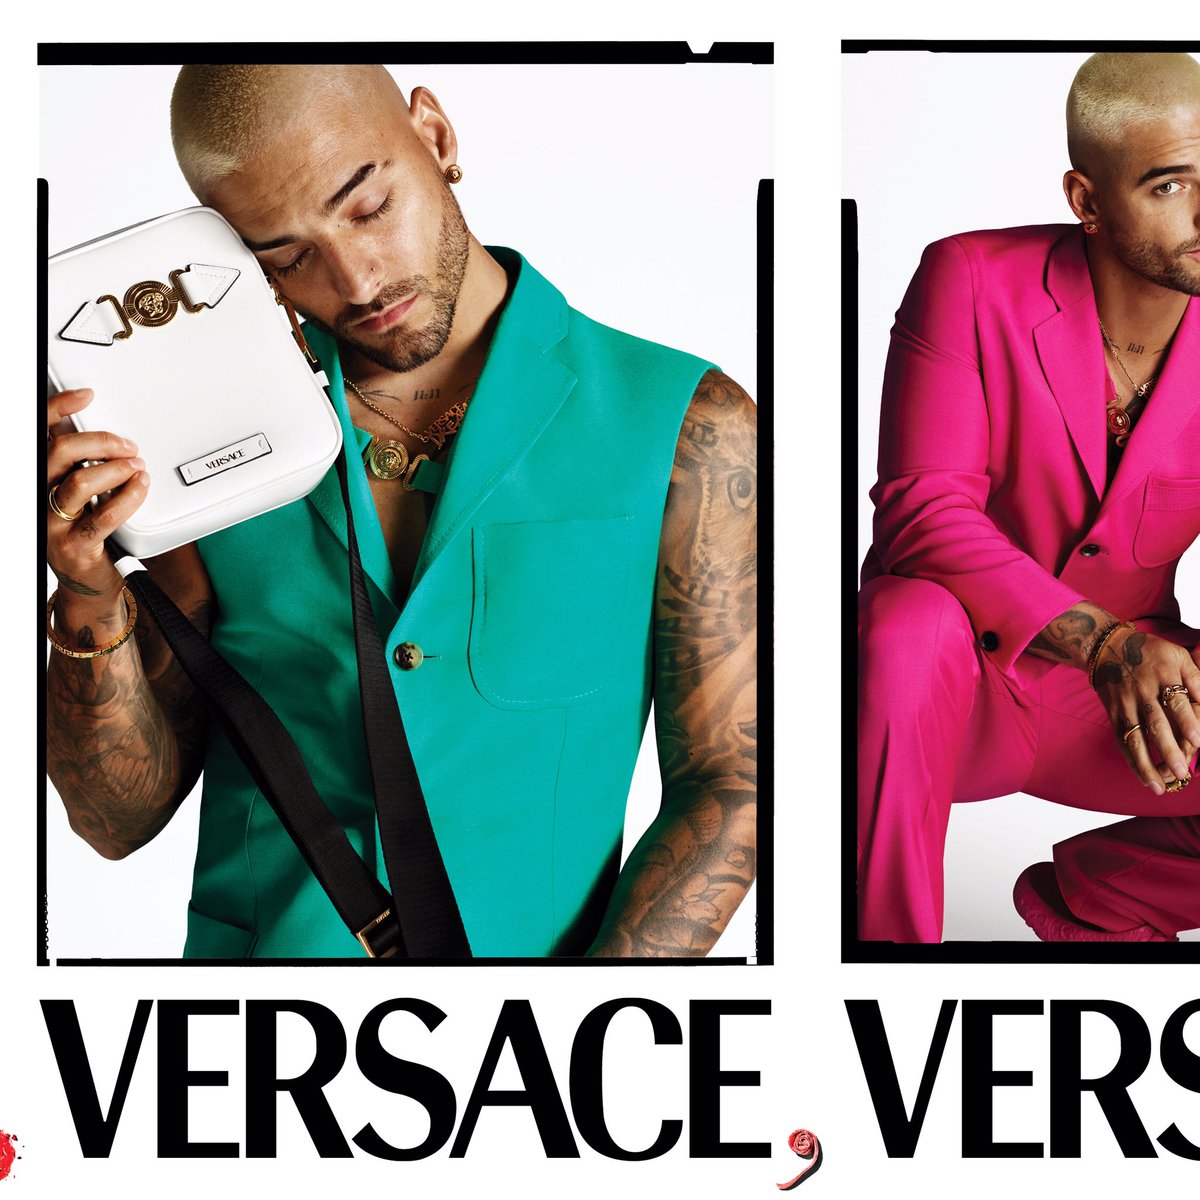 Forever, Donatella, Versace,

#Maluma for #VersaceSS22 Men’s.